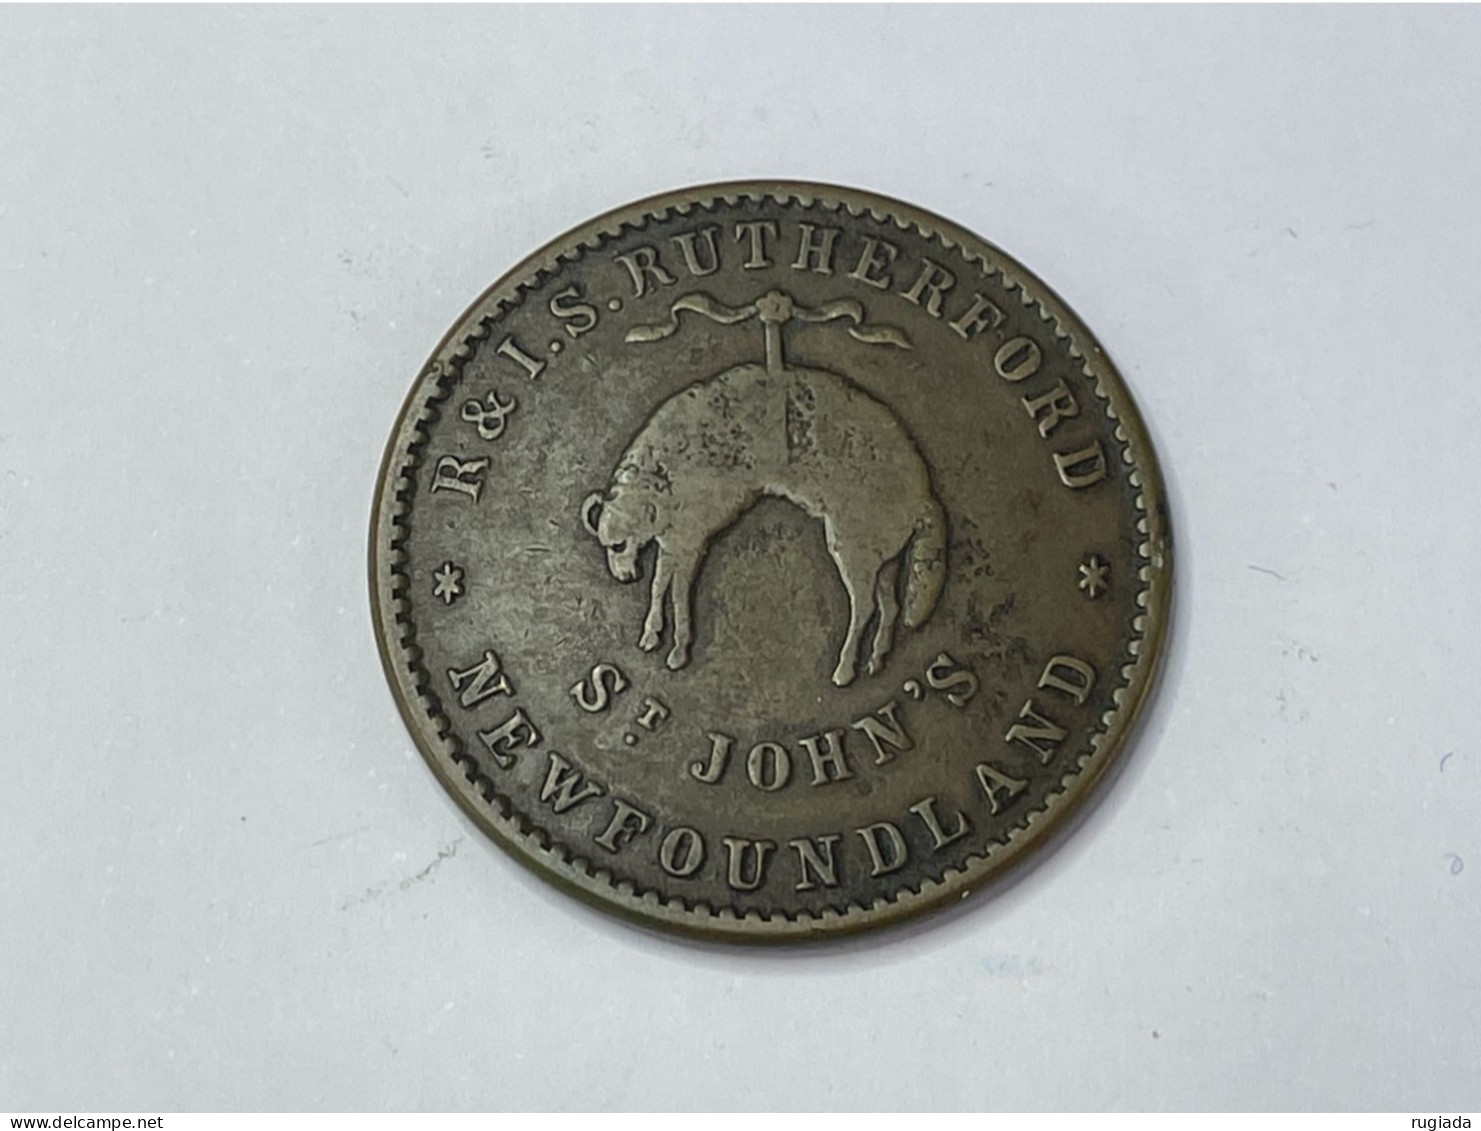 1841 Canada New Foundland Rutherford St John's Sheep 1/2 Half Penny, Fine - Canada